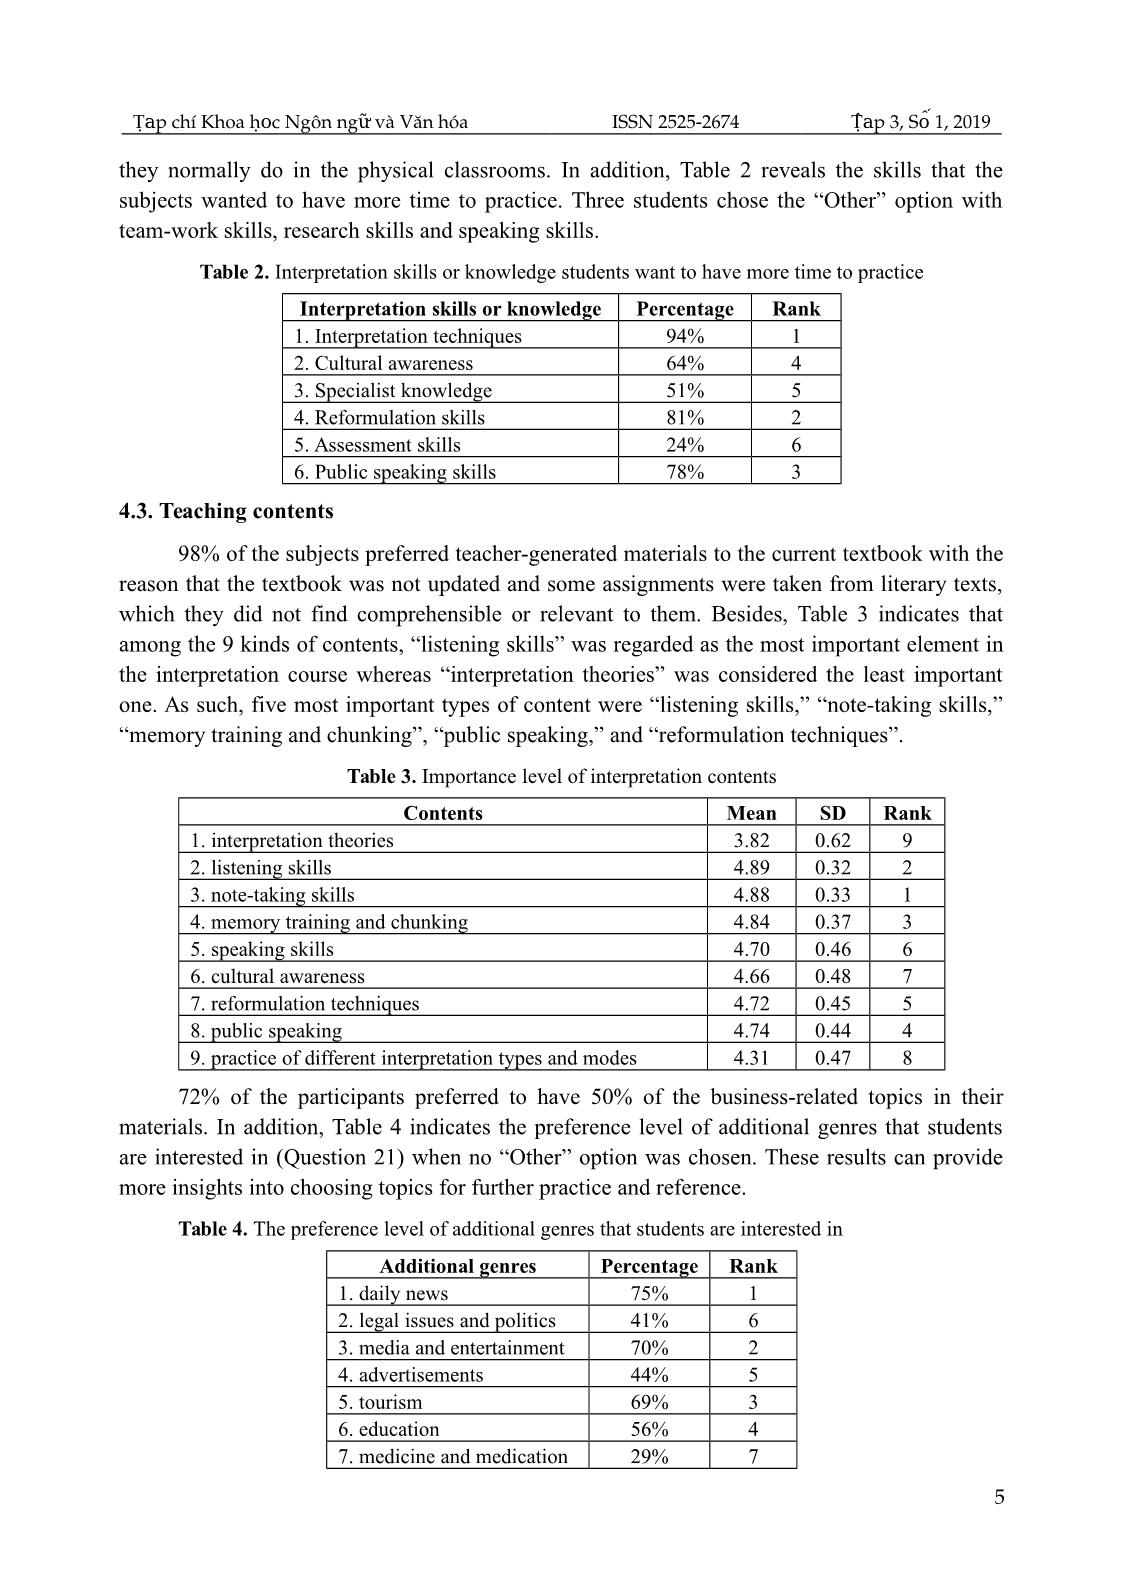 Analyzing undergraduates’ needs for an improvement in interpreter training curriculum at banking university HCMC, Vietnam trang 5